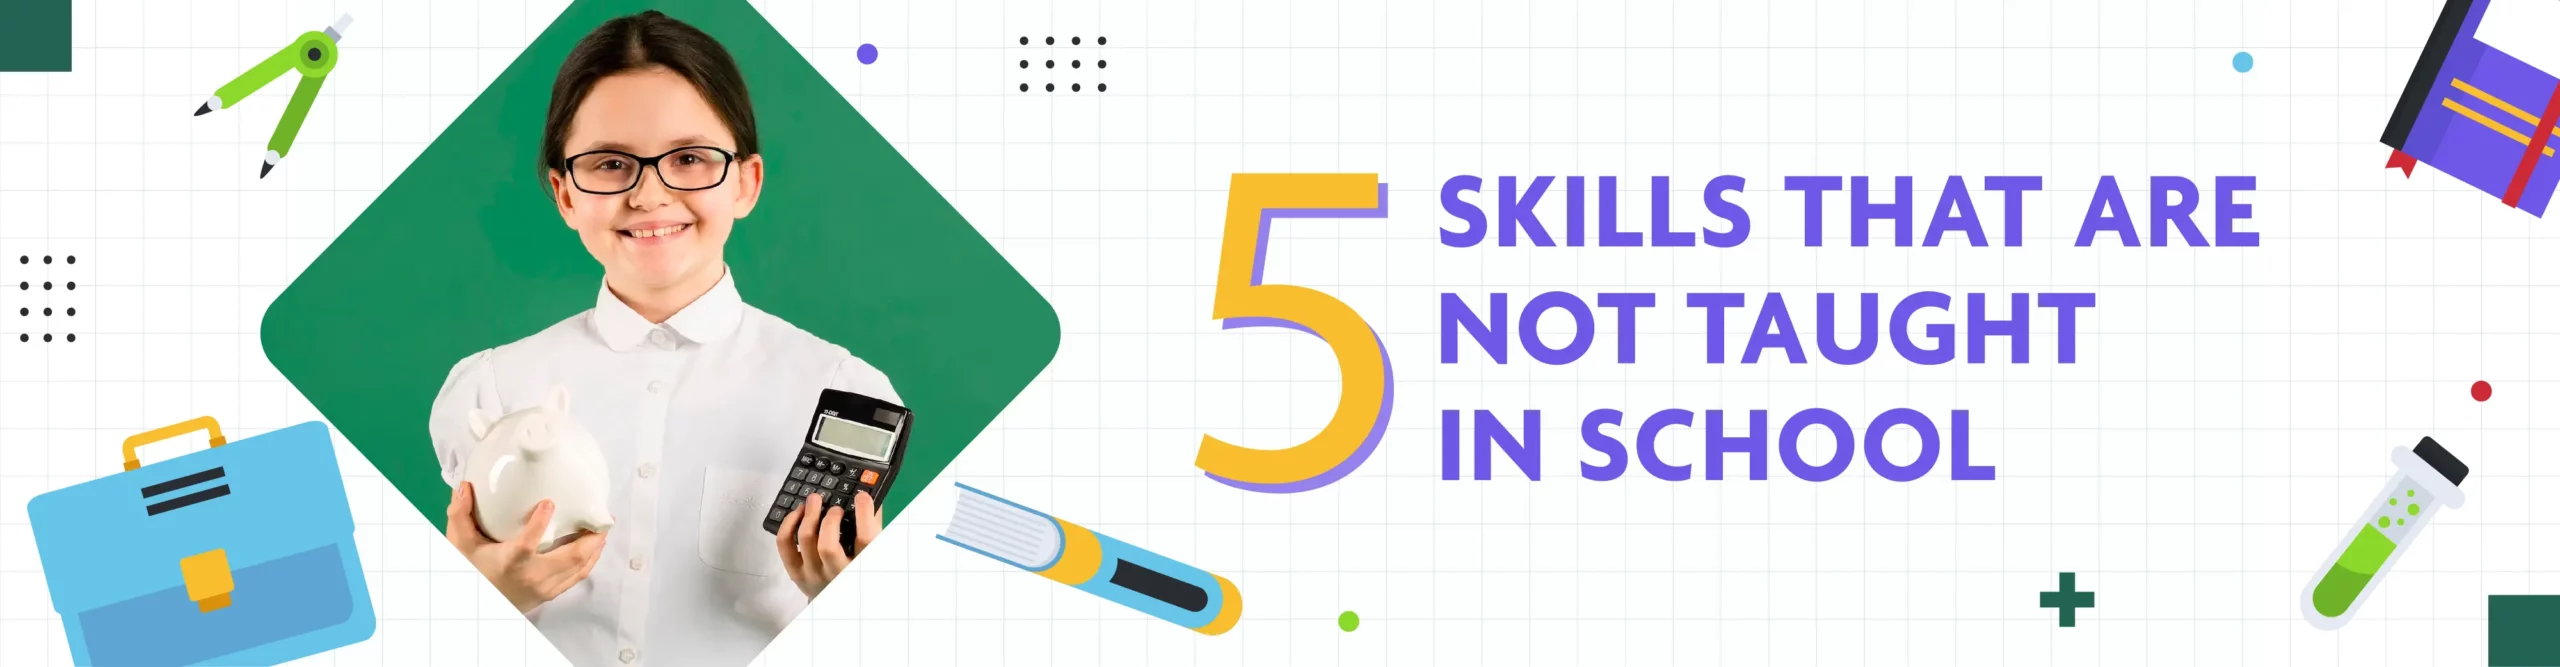 5 Skills not taught in school